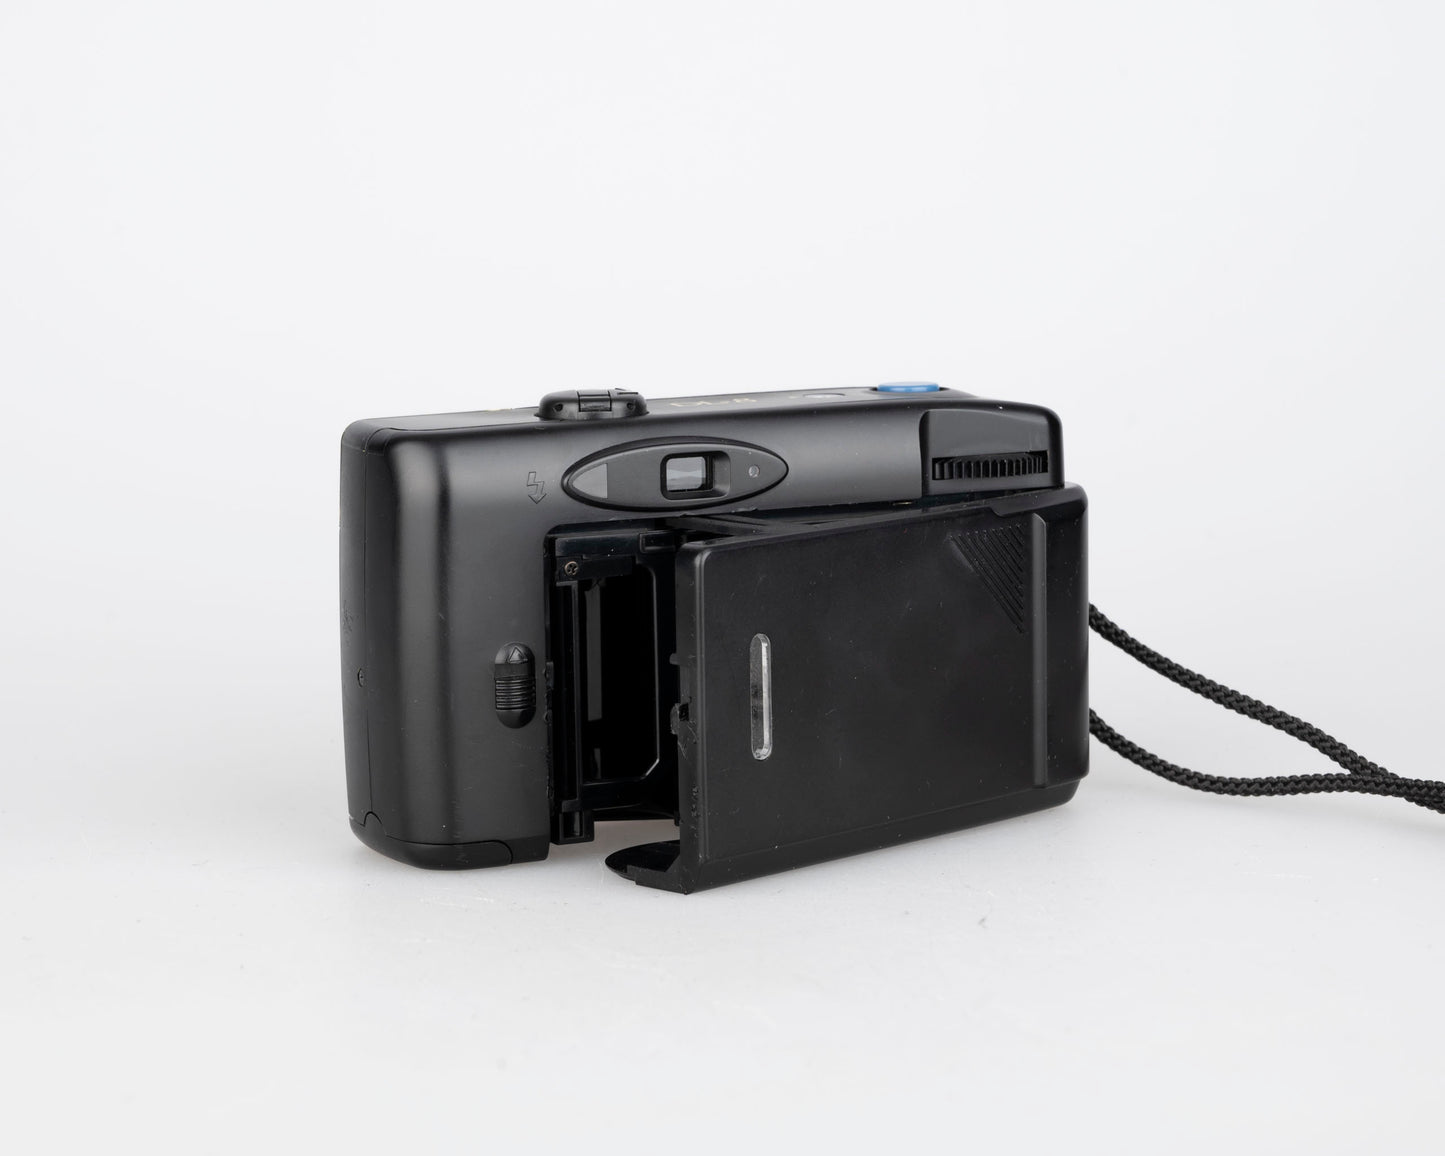 Fujifilm DL-8 35mm film camera (serial 90926754)